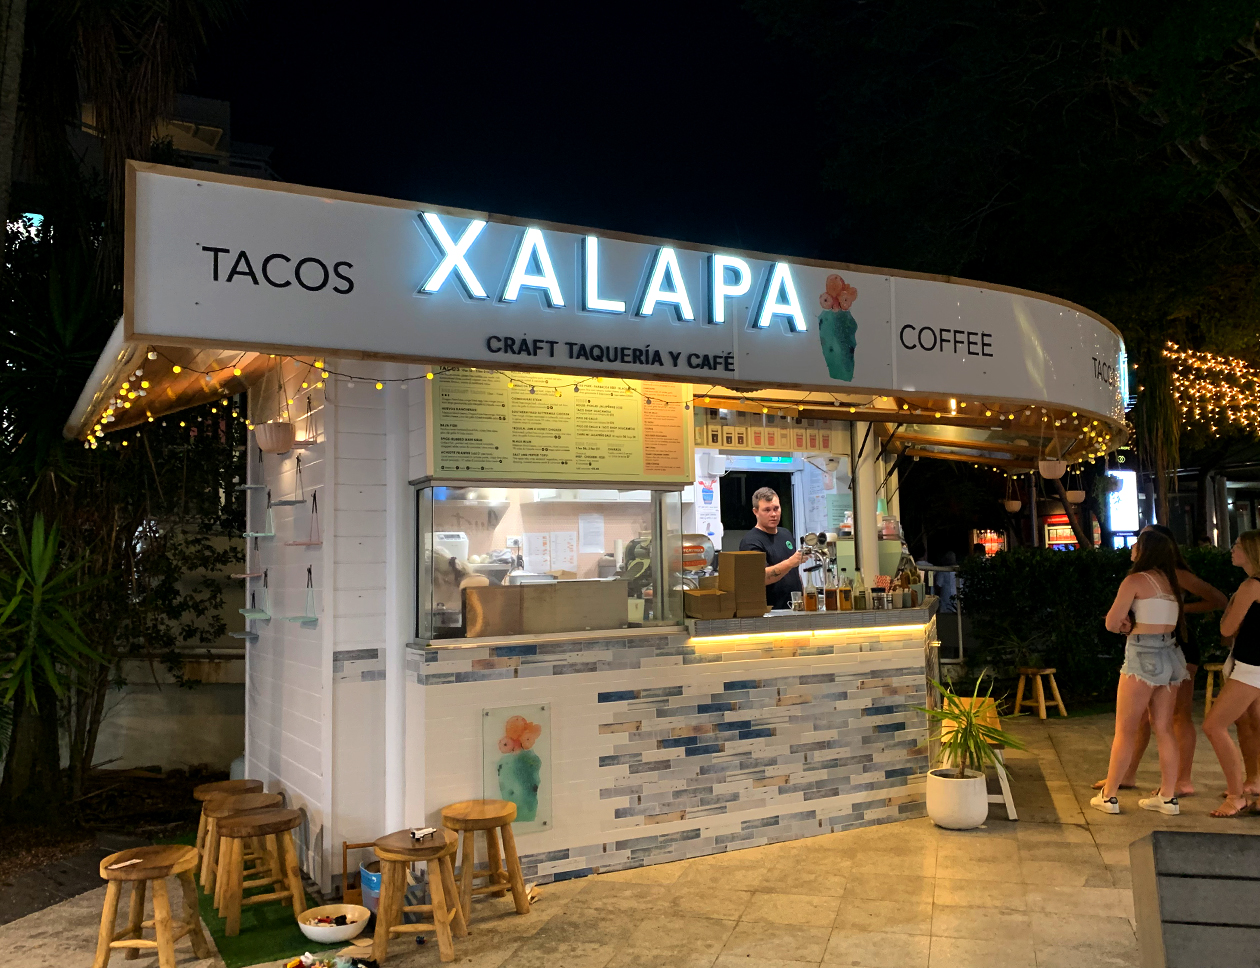 Xalapa illuminated front sign